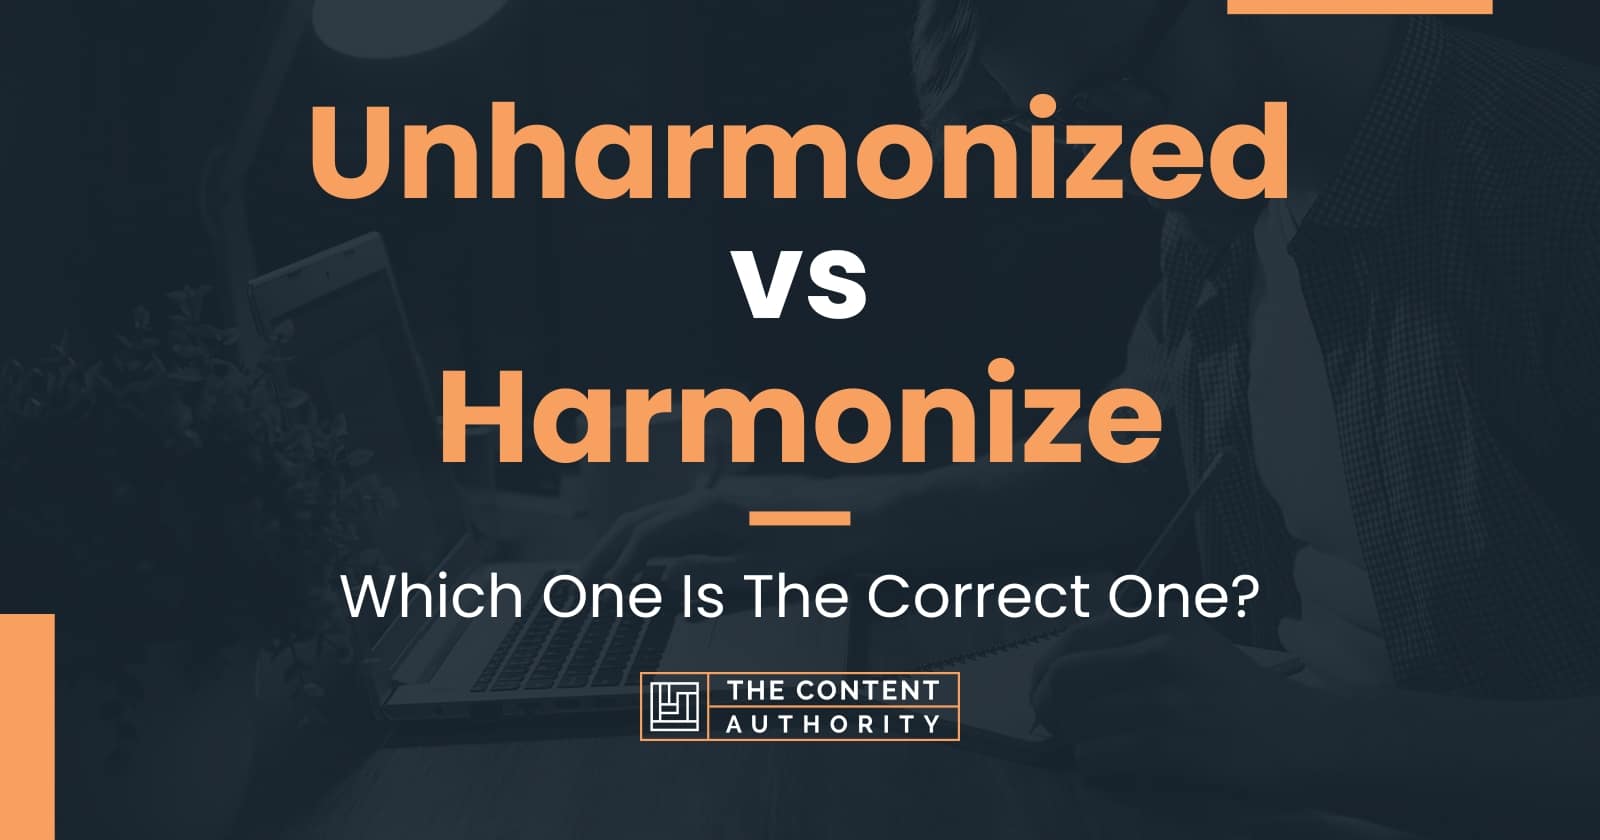 Unharmonized vs Harmonize: Which One Is The Correct One?